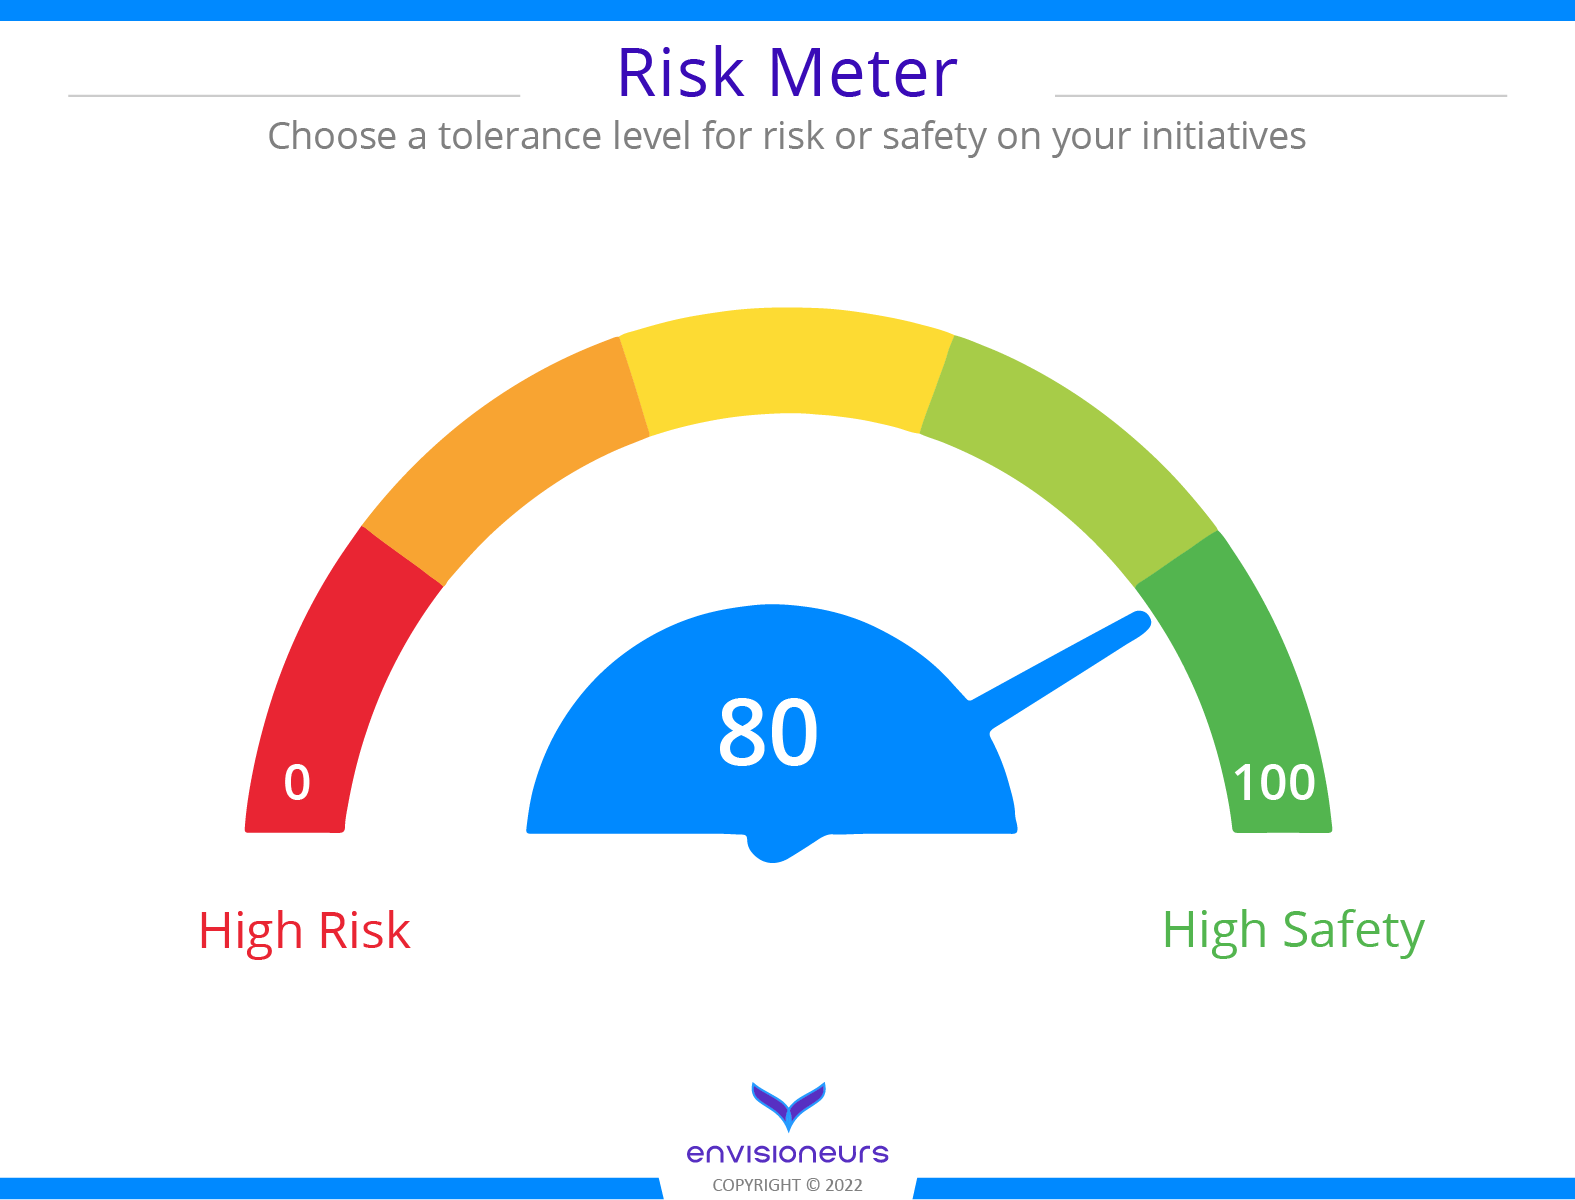 Risk Meter - Risk Tolerance tool